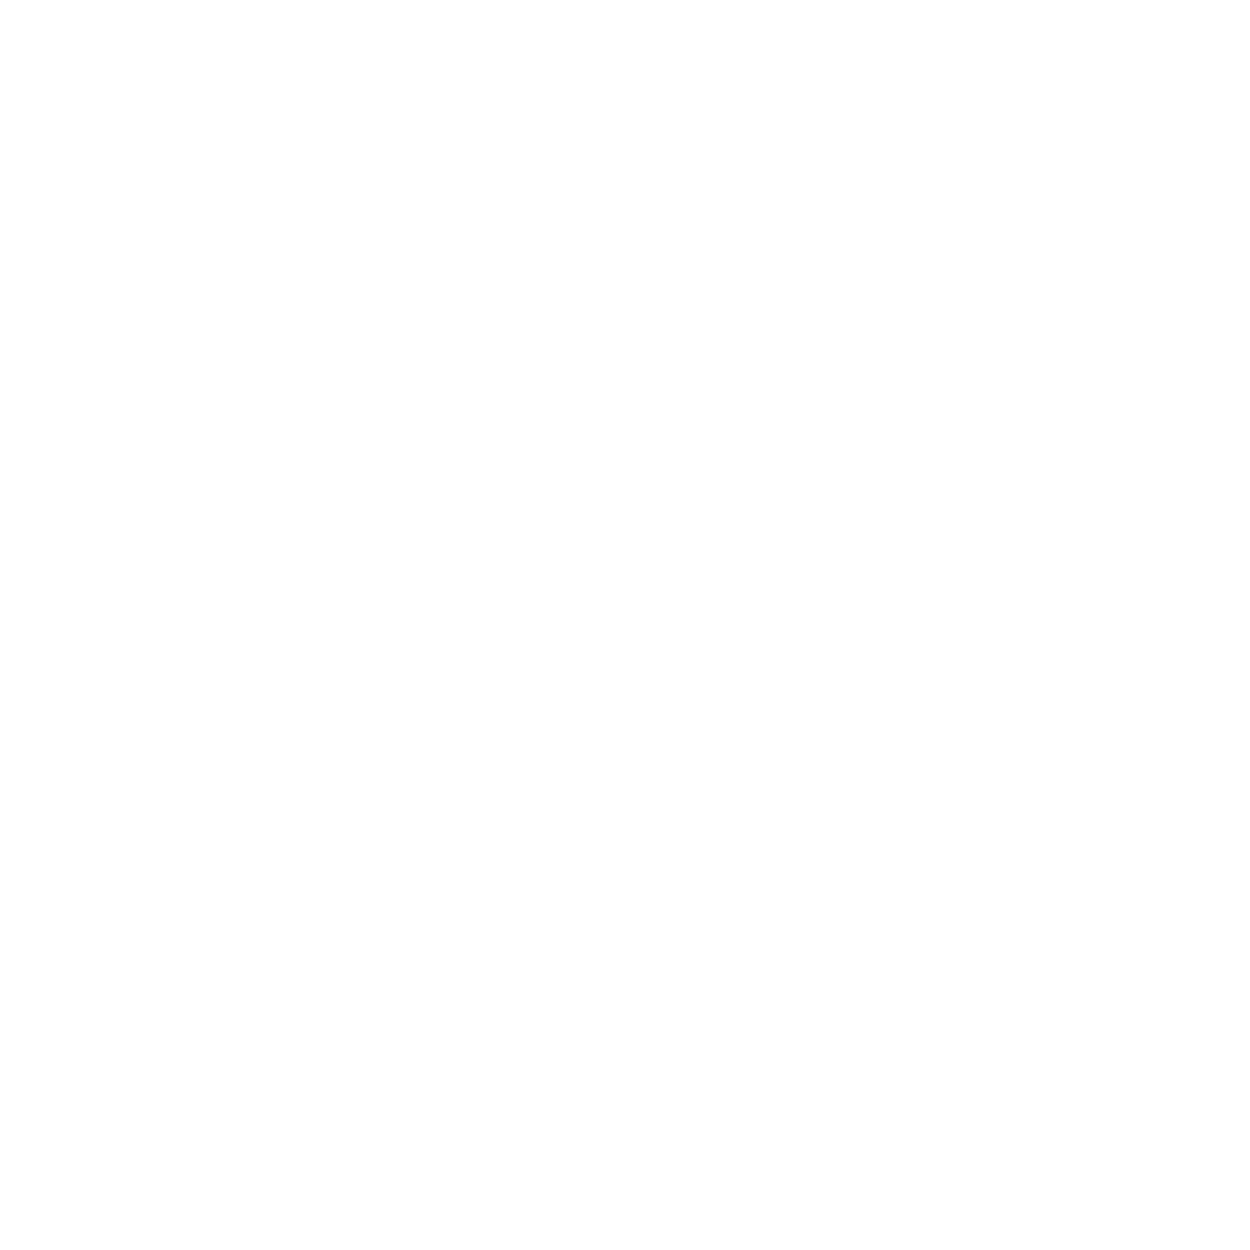 The General Association of Zhejiang Entrepreneurs